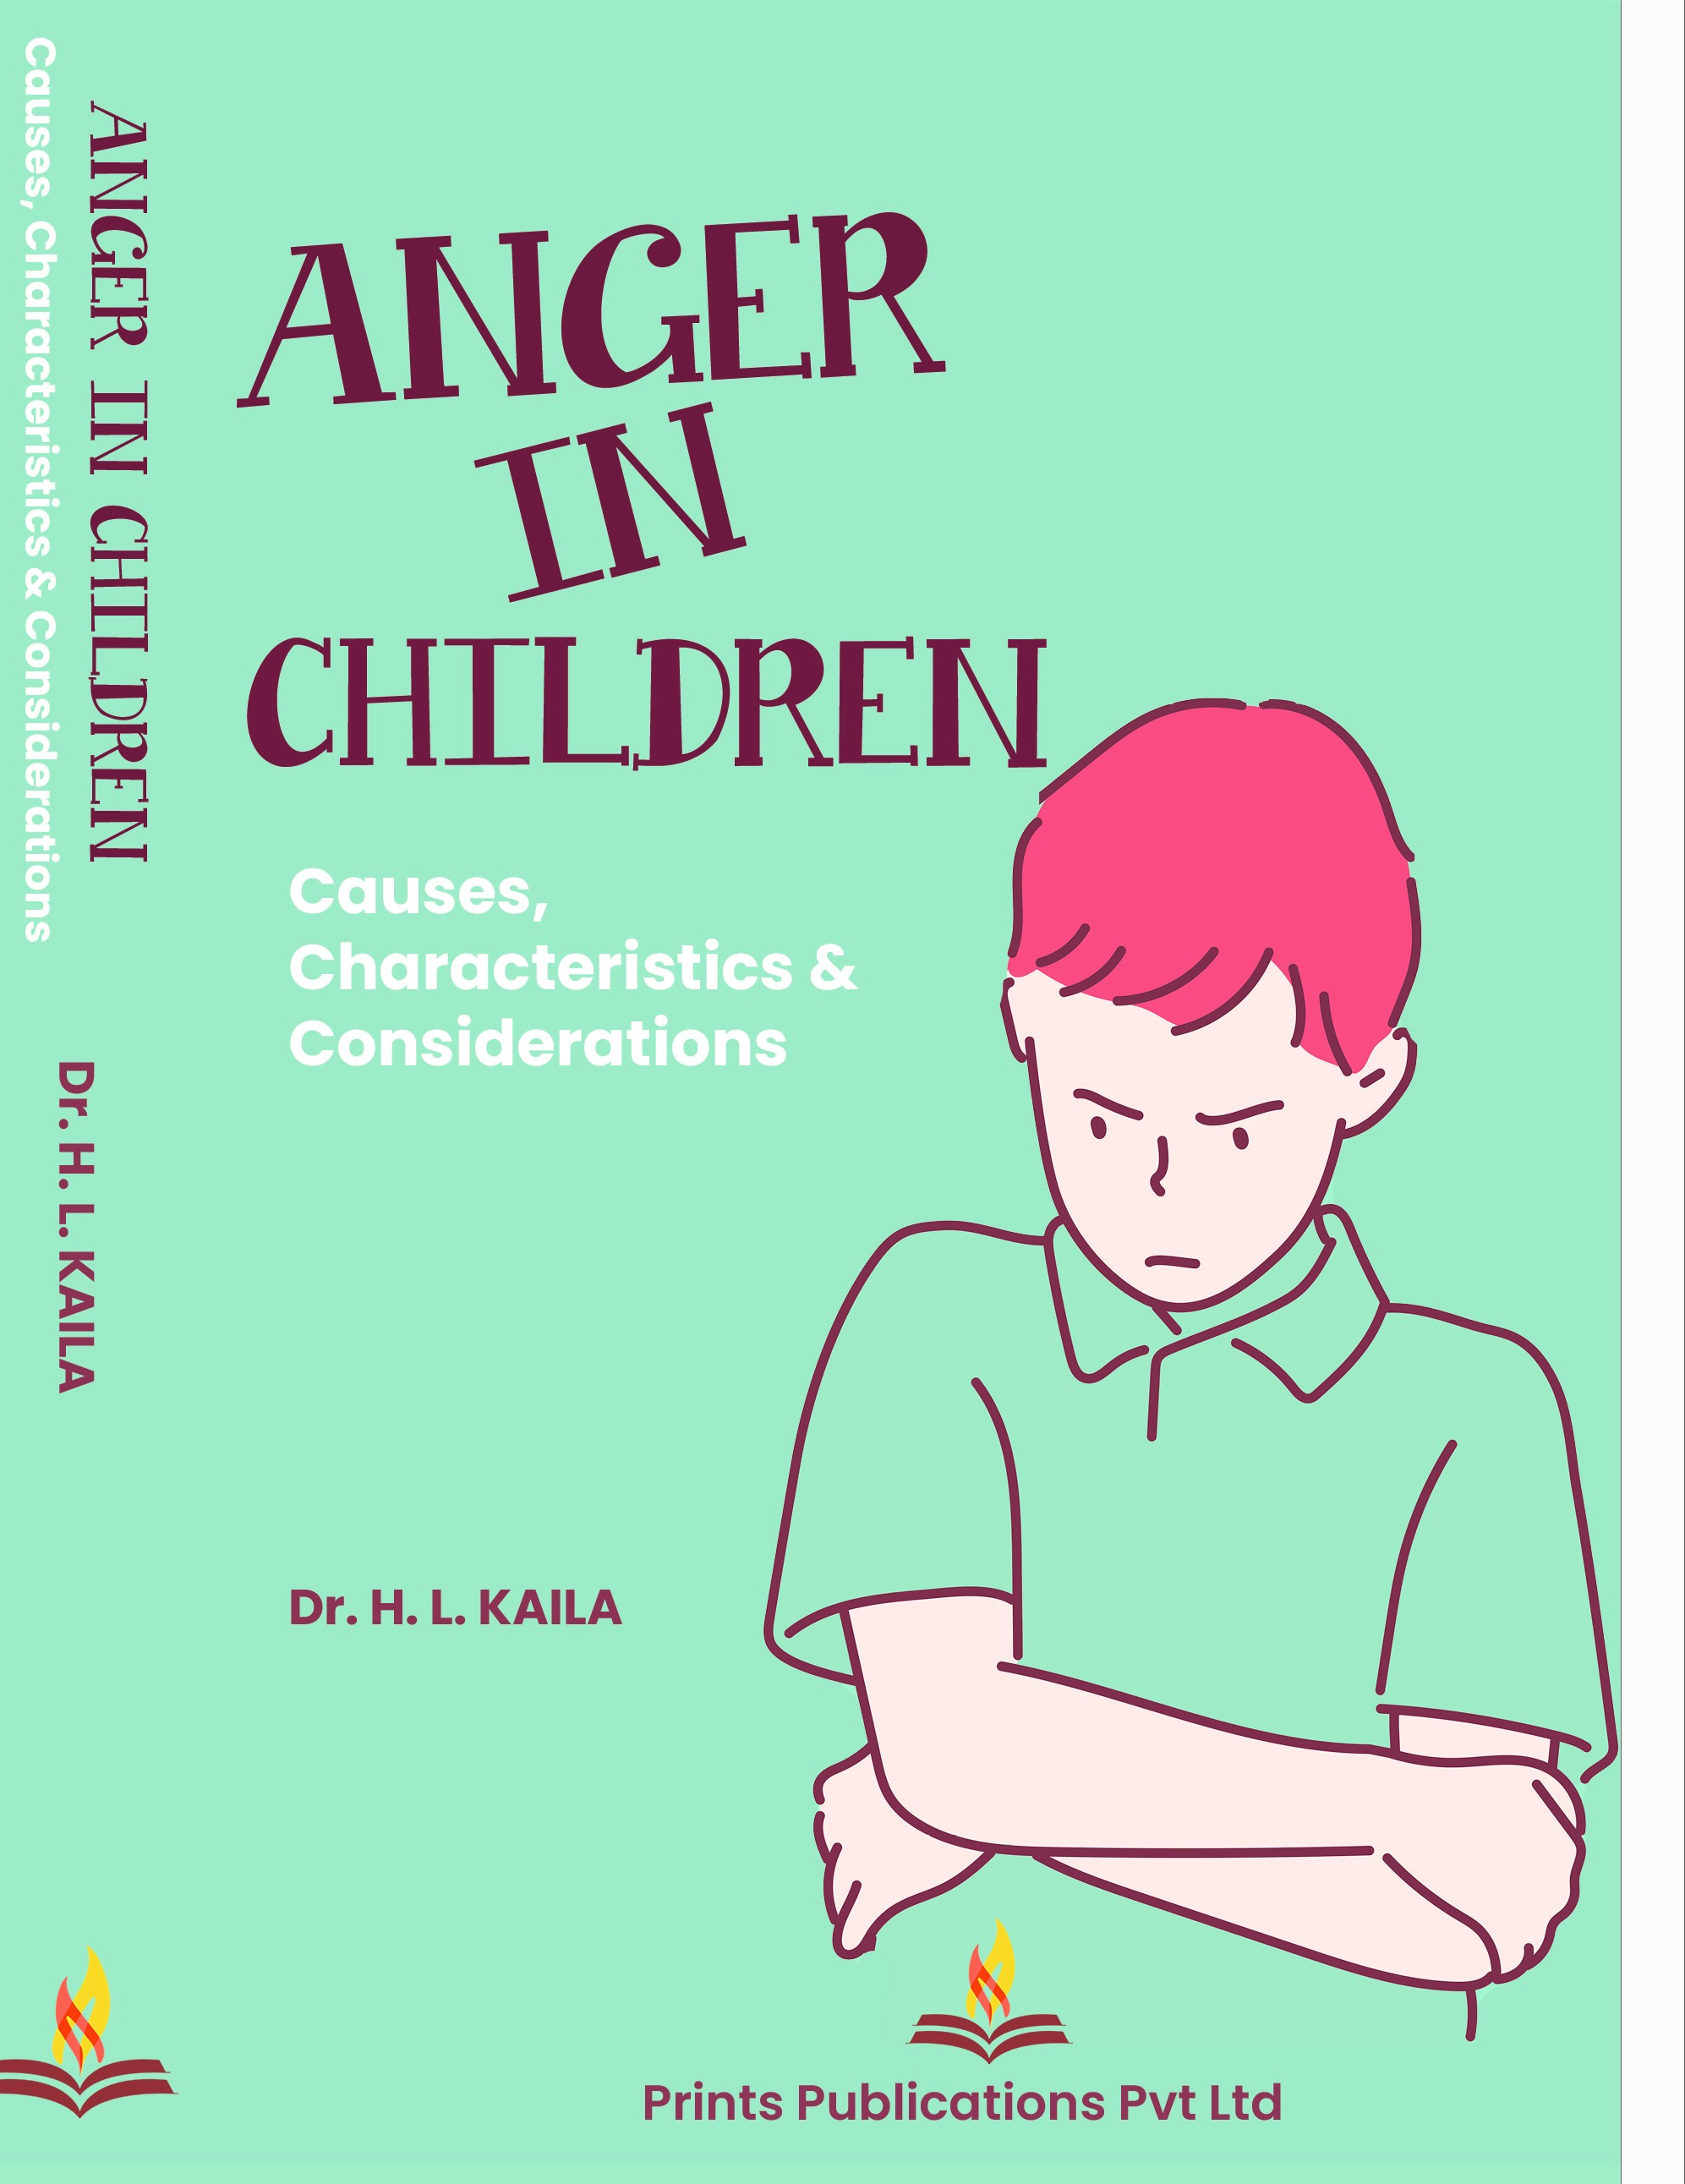 ANGER IN CHILDREN